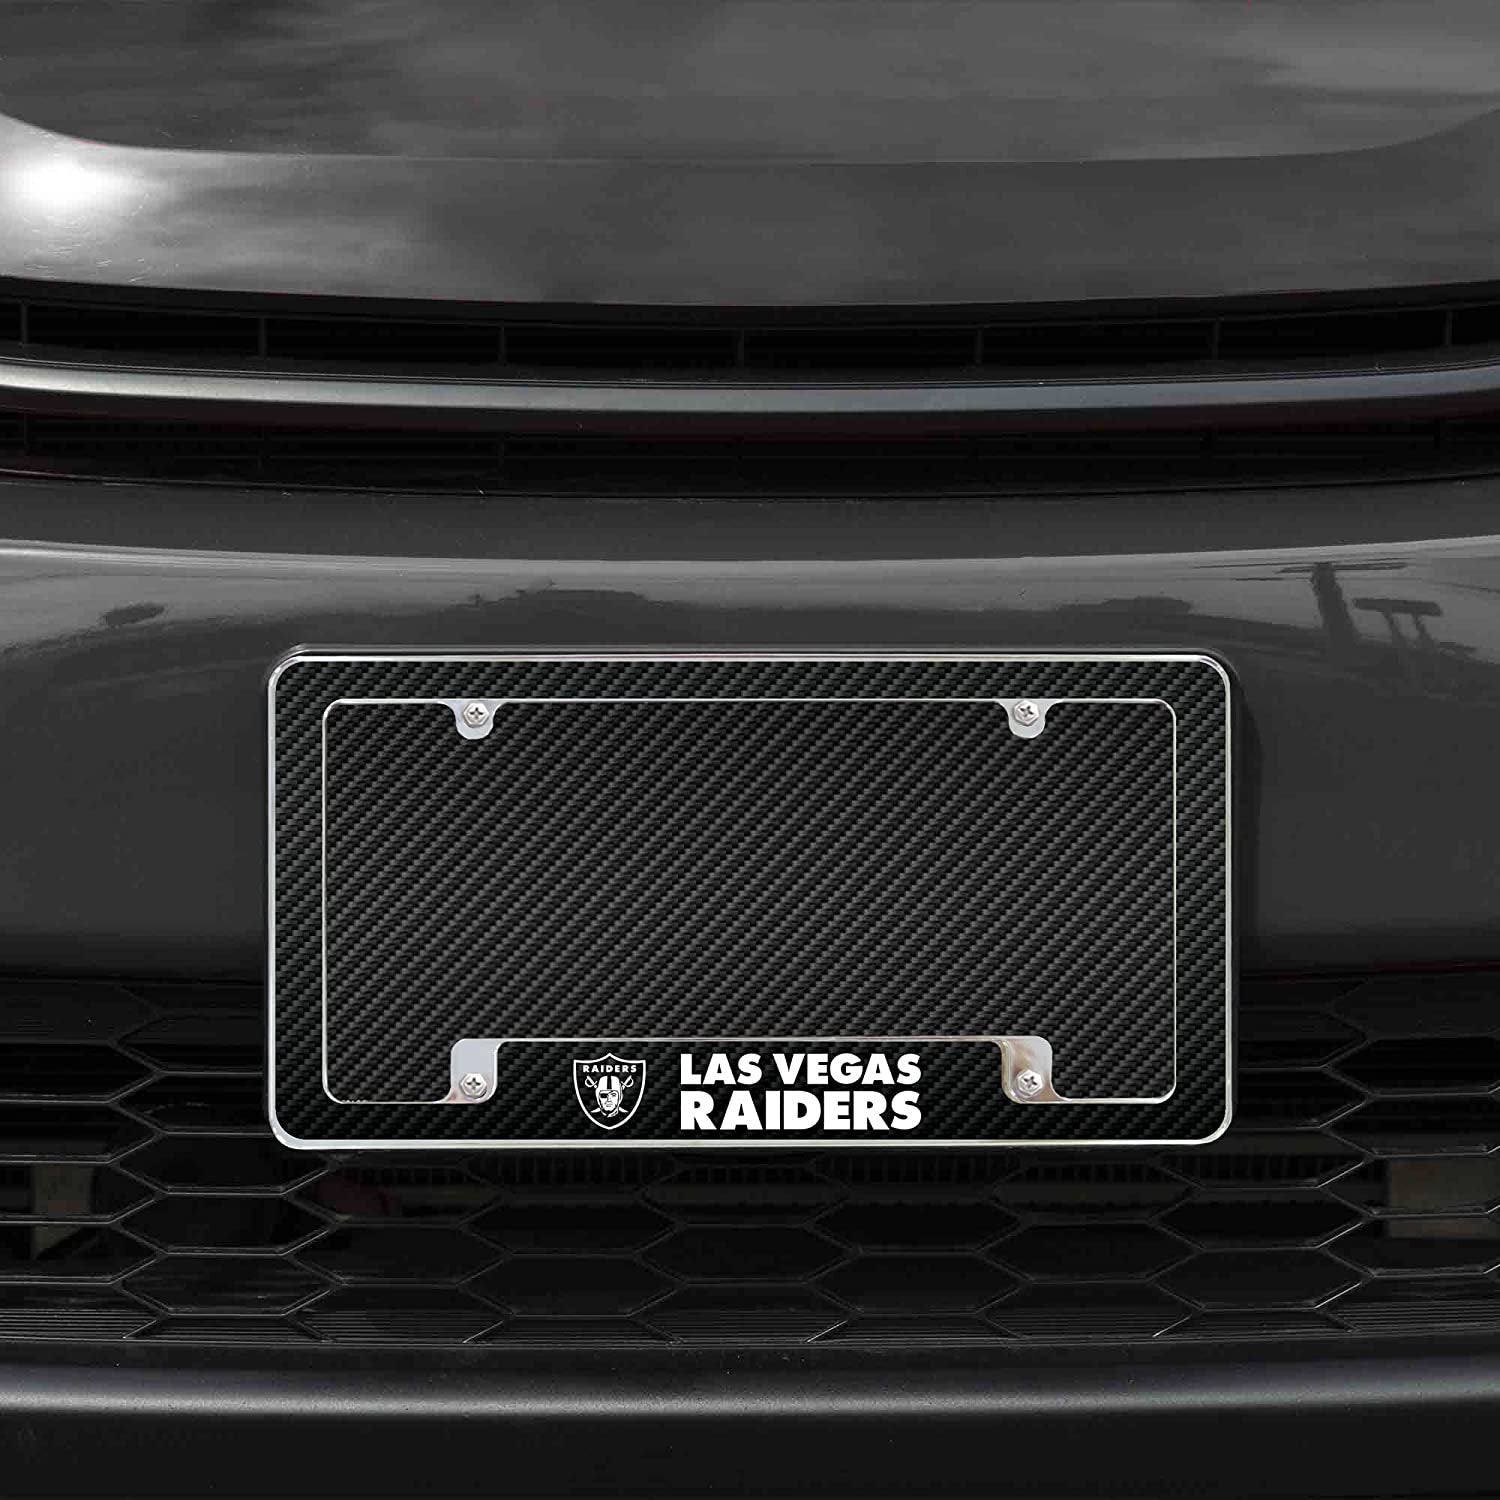 Las Vegas Raiders Metal License Plate Frame Tag Cover Carbon Fiber Design 12x6 Inch